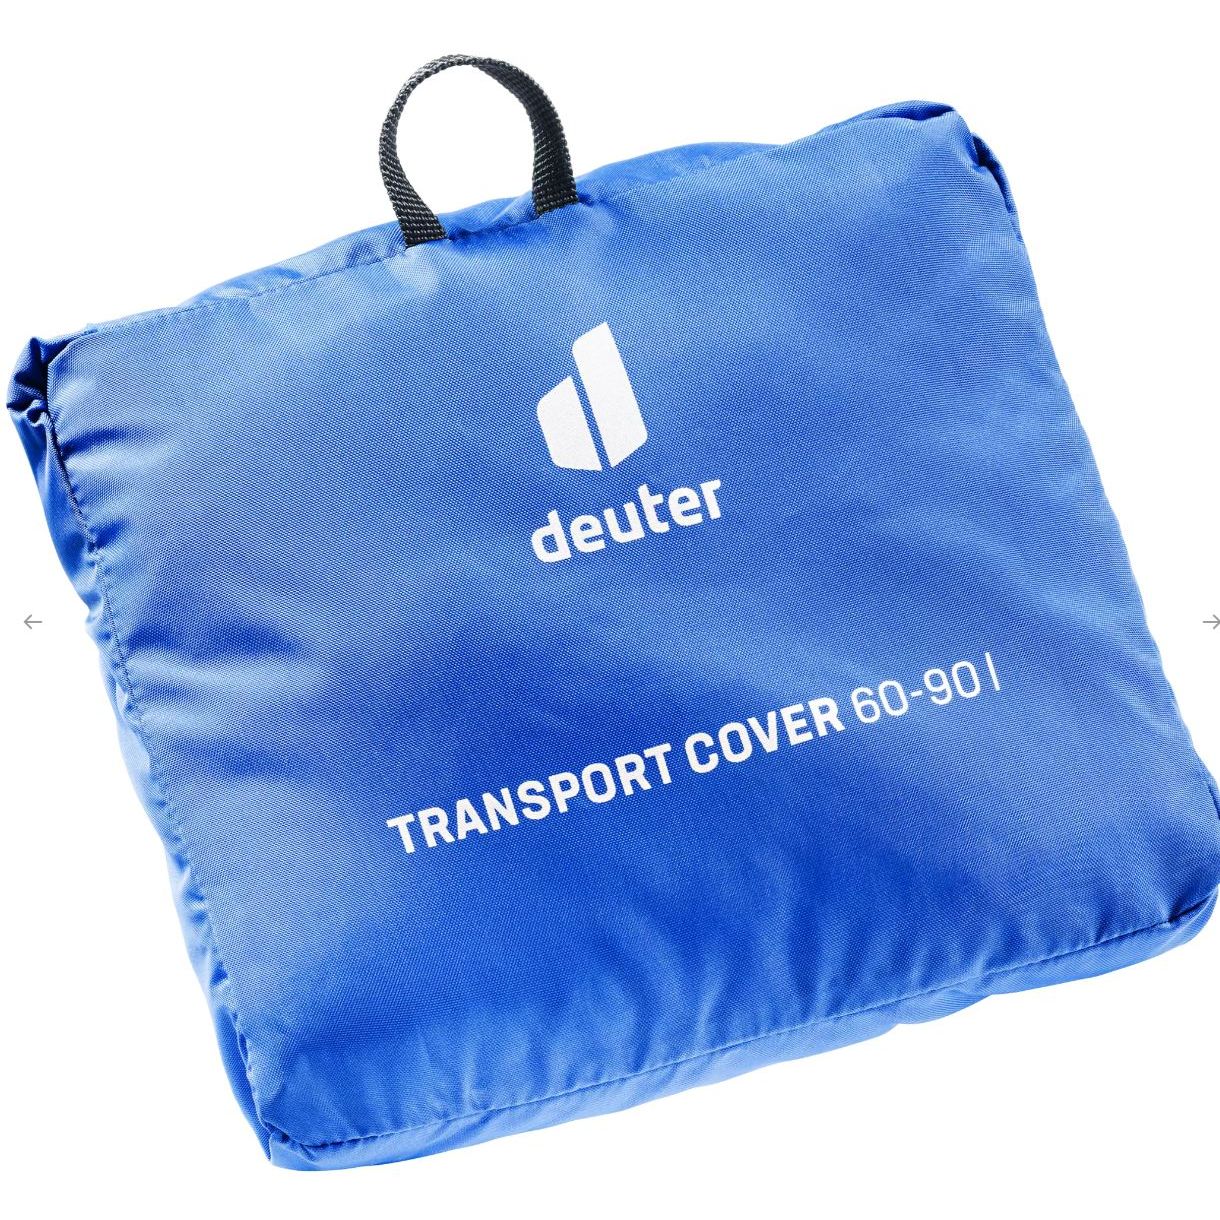 Transport Cover 60-90 Liter